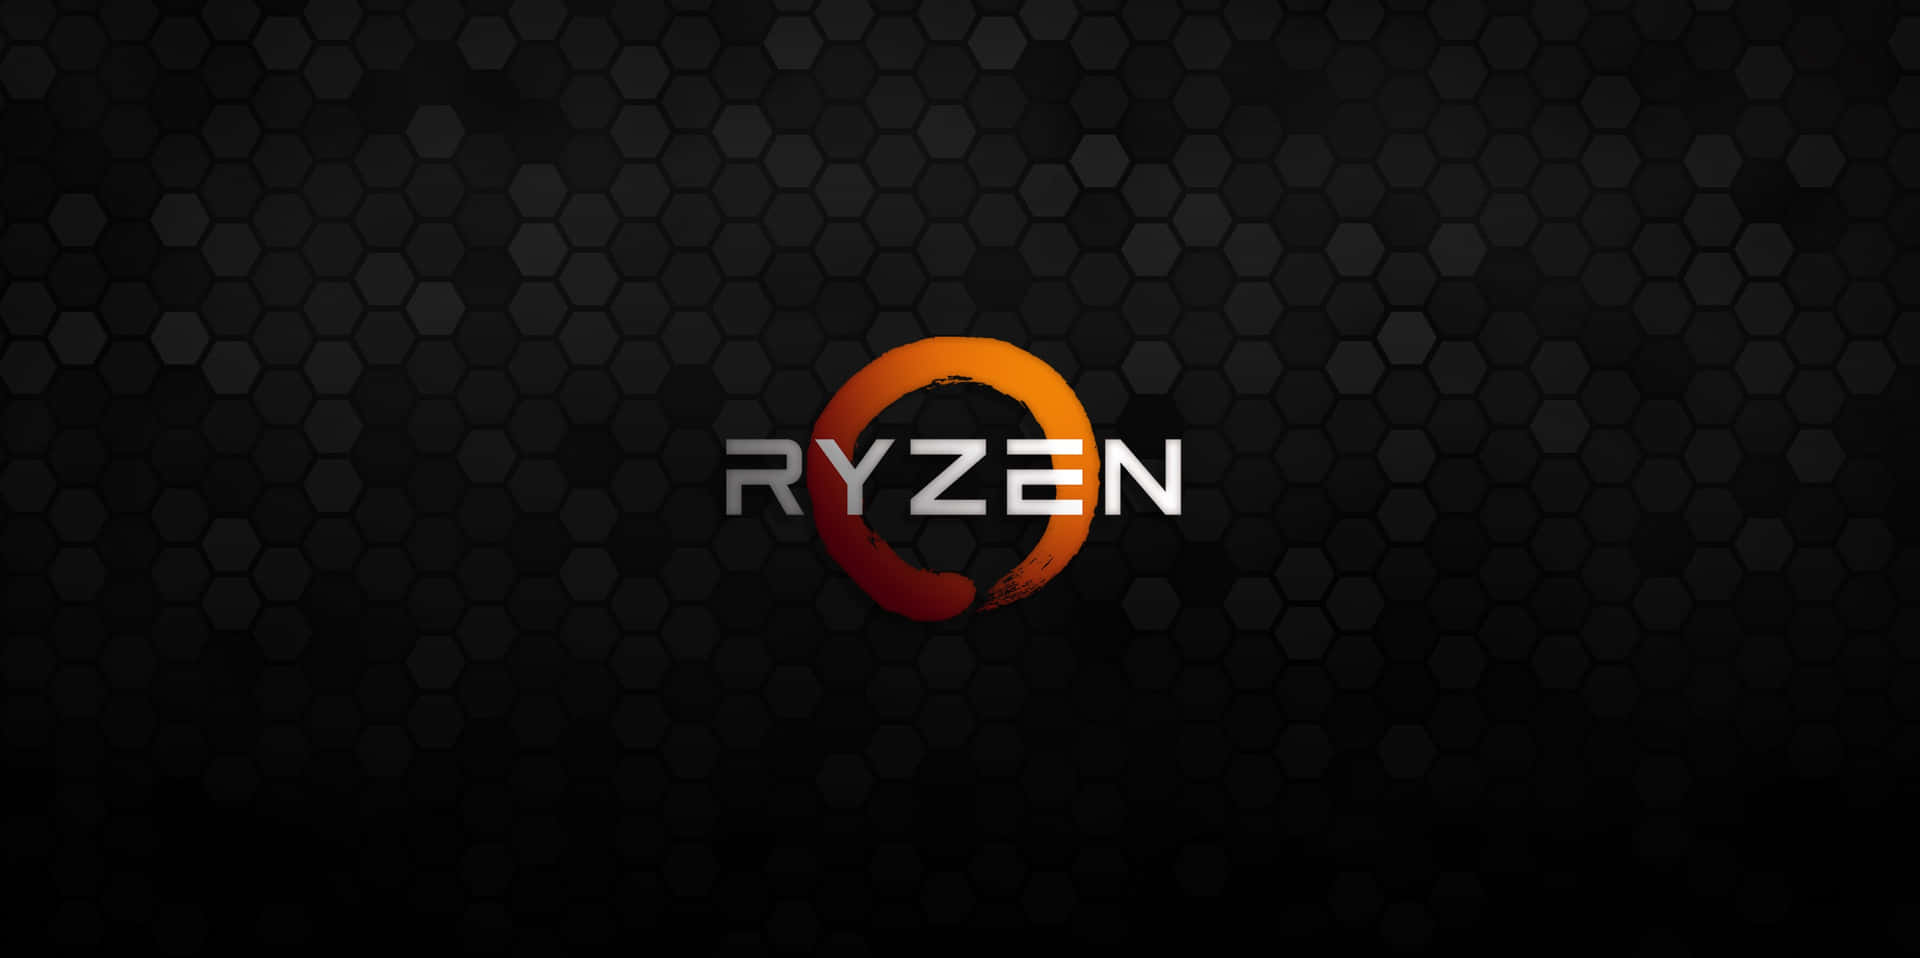 Ryzen Logo Dark Hexagon Background Wallpaper